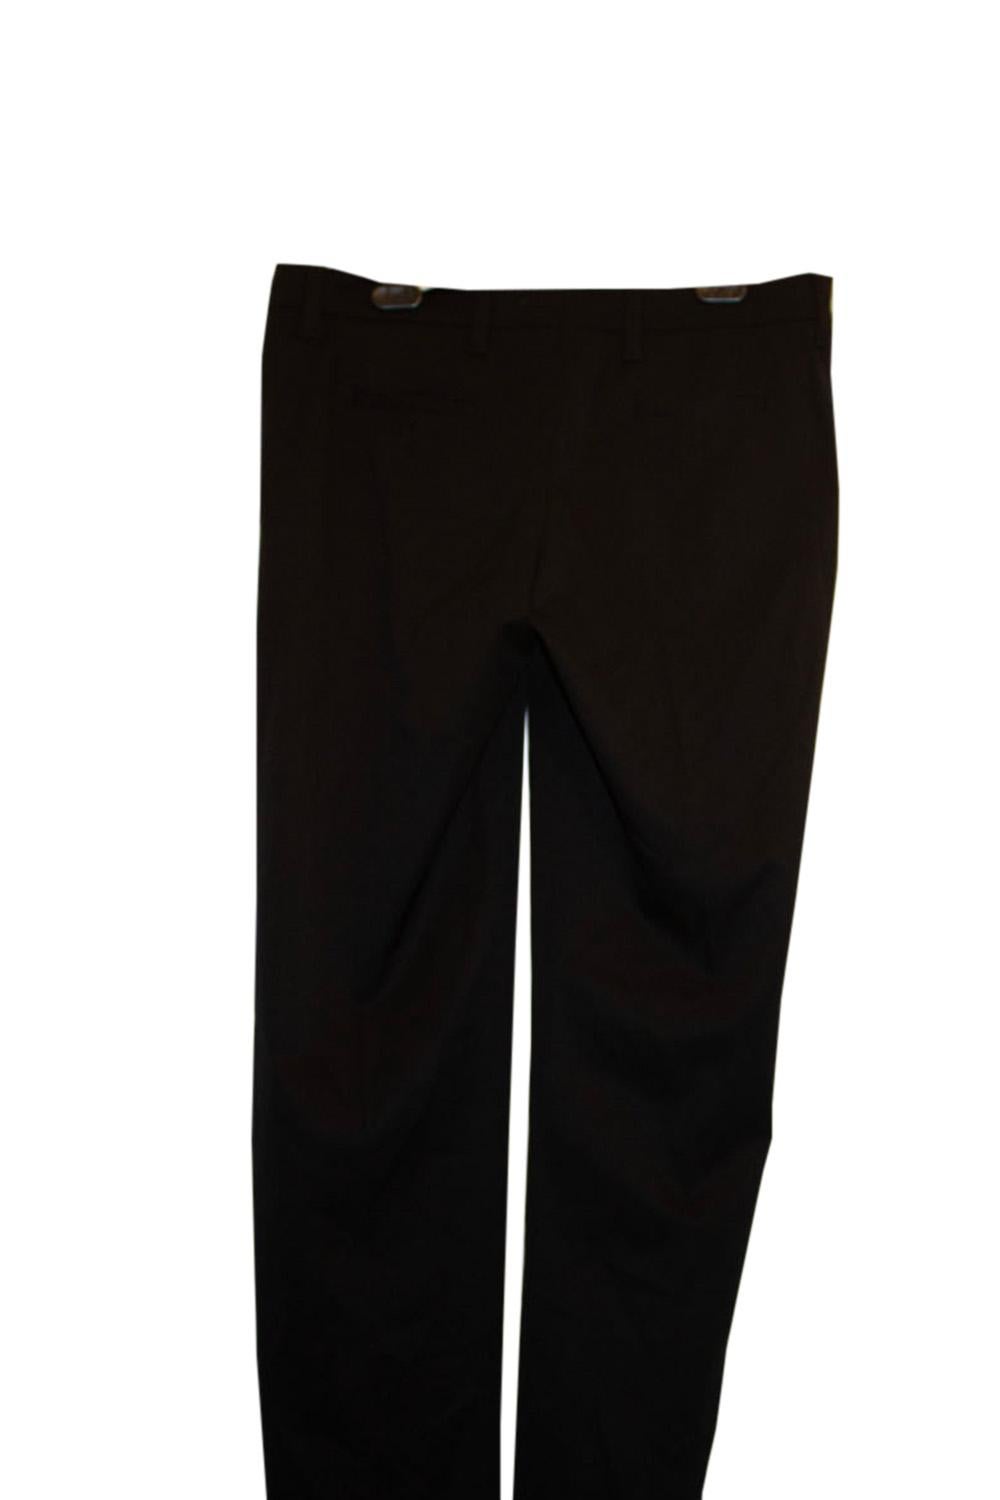 Black Prada Wool Trousers / Pants For Sale 1